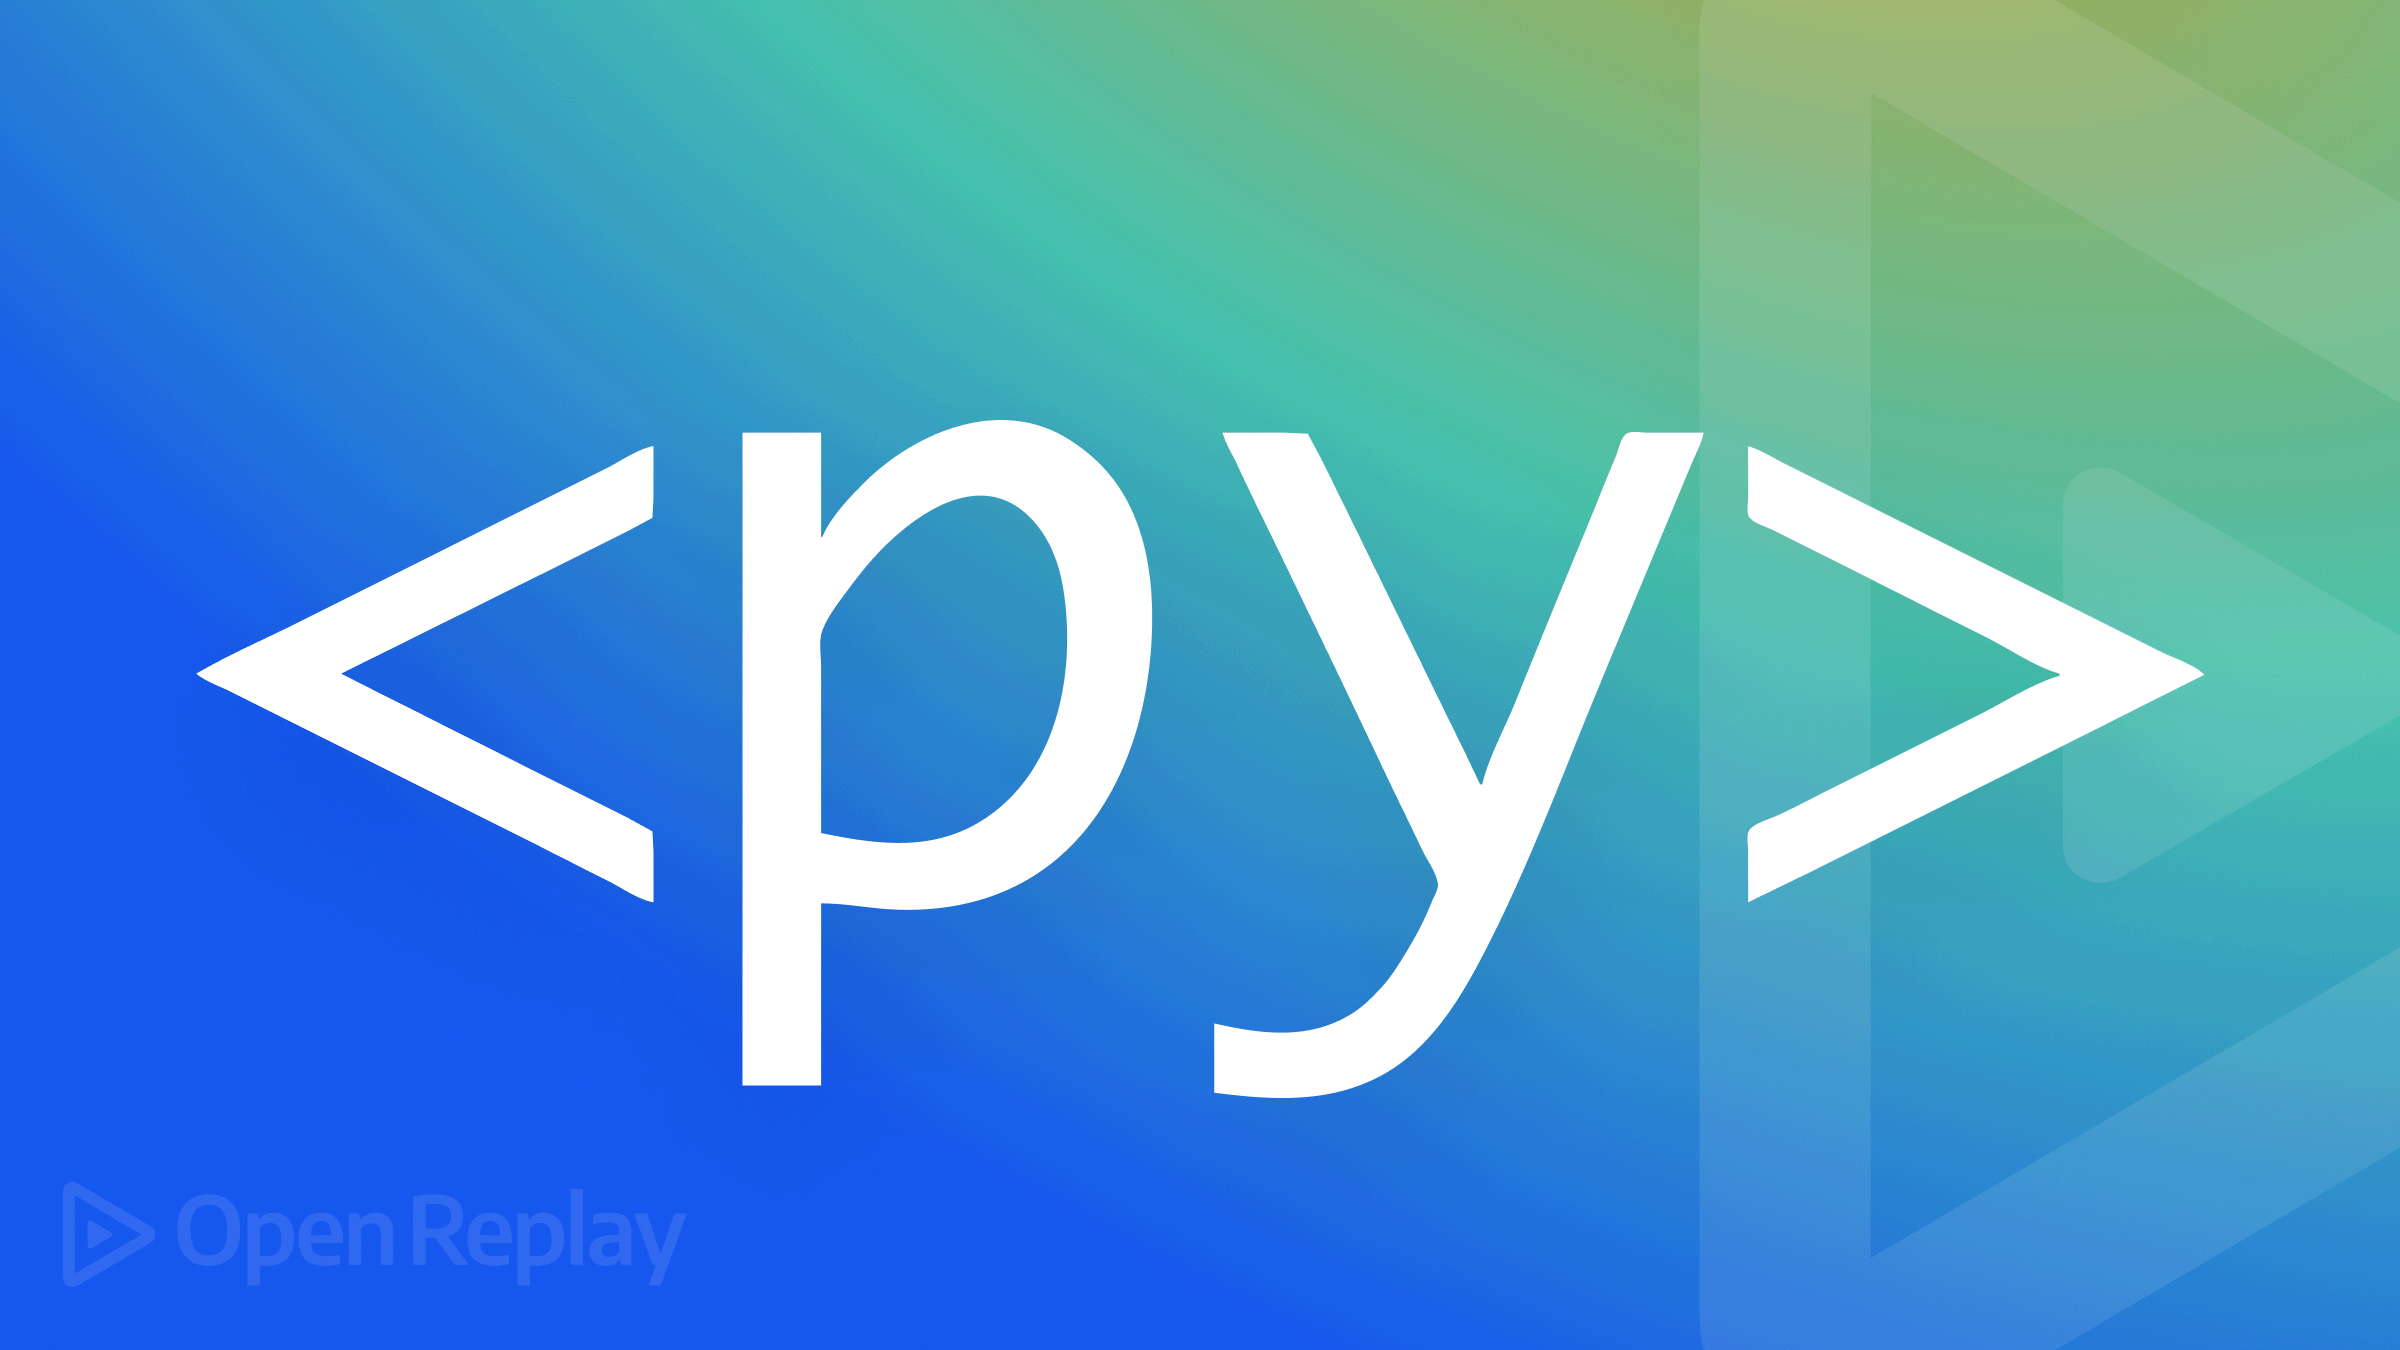 PyScript: Python on the Web